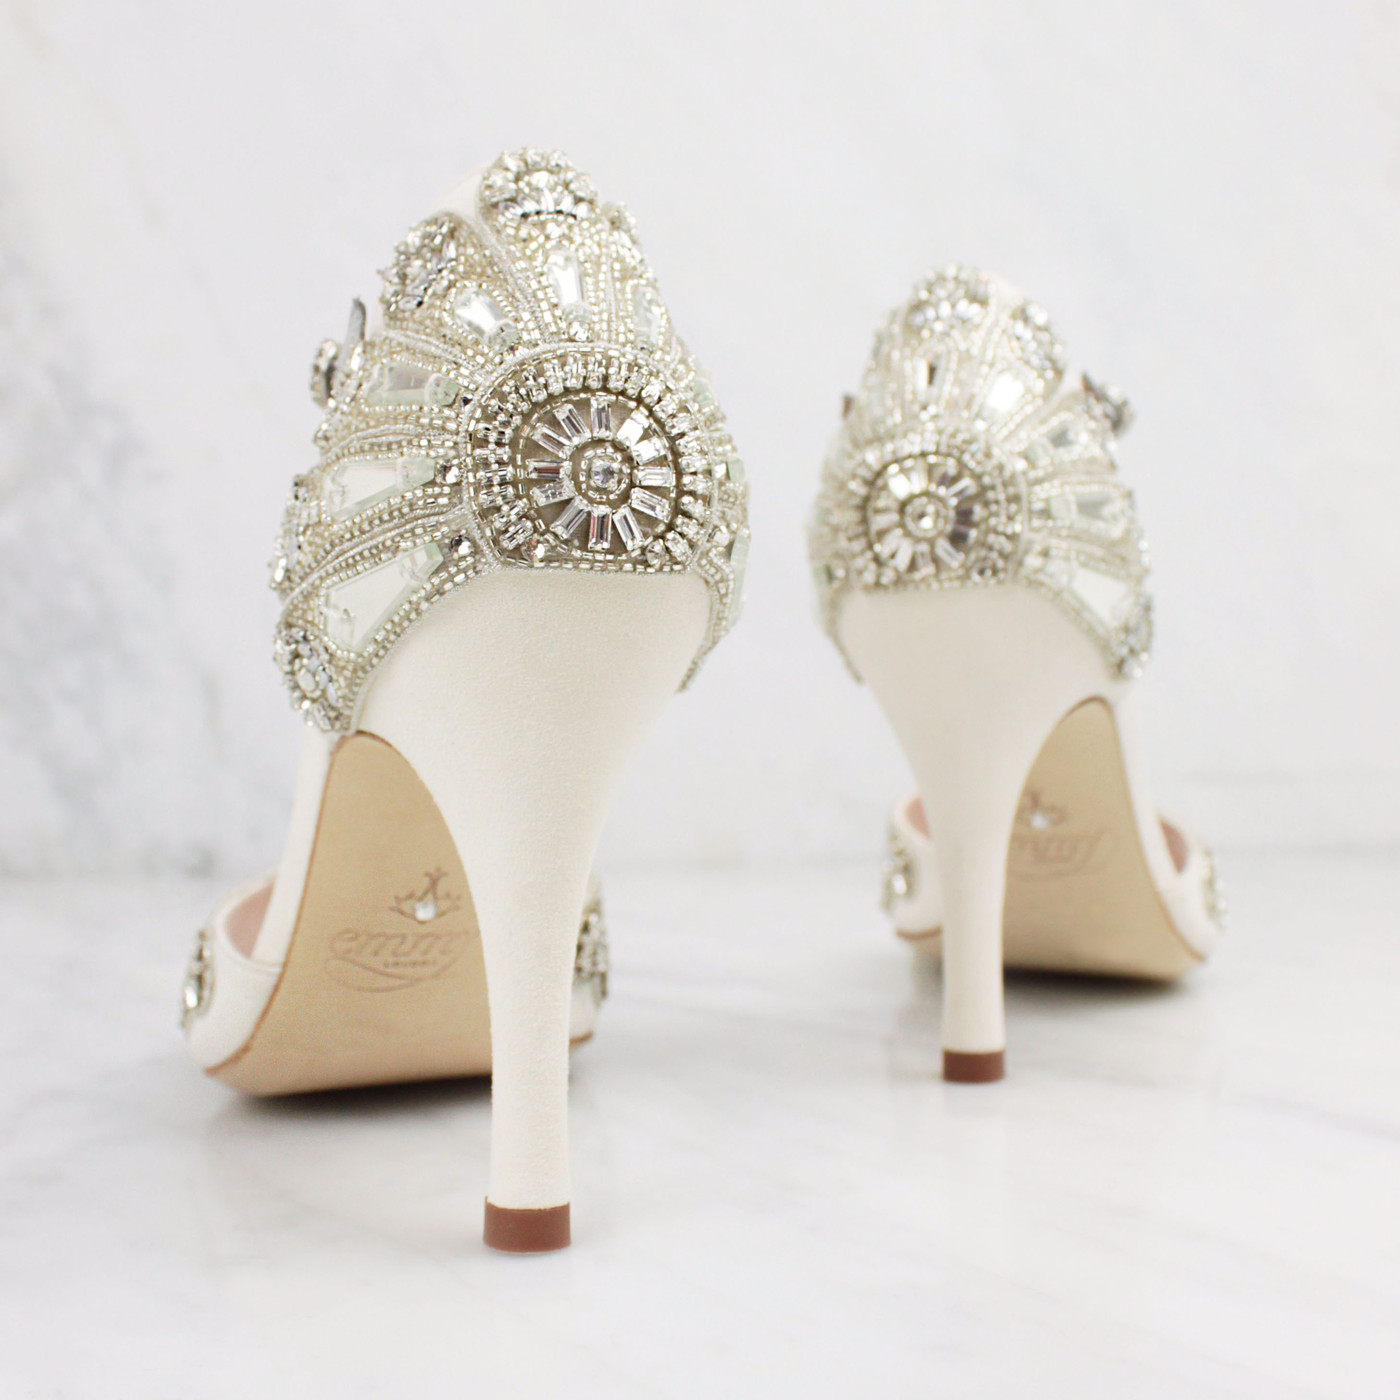 Glamorous Bridal Heels from Emmy London